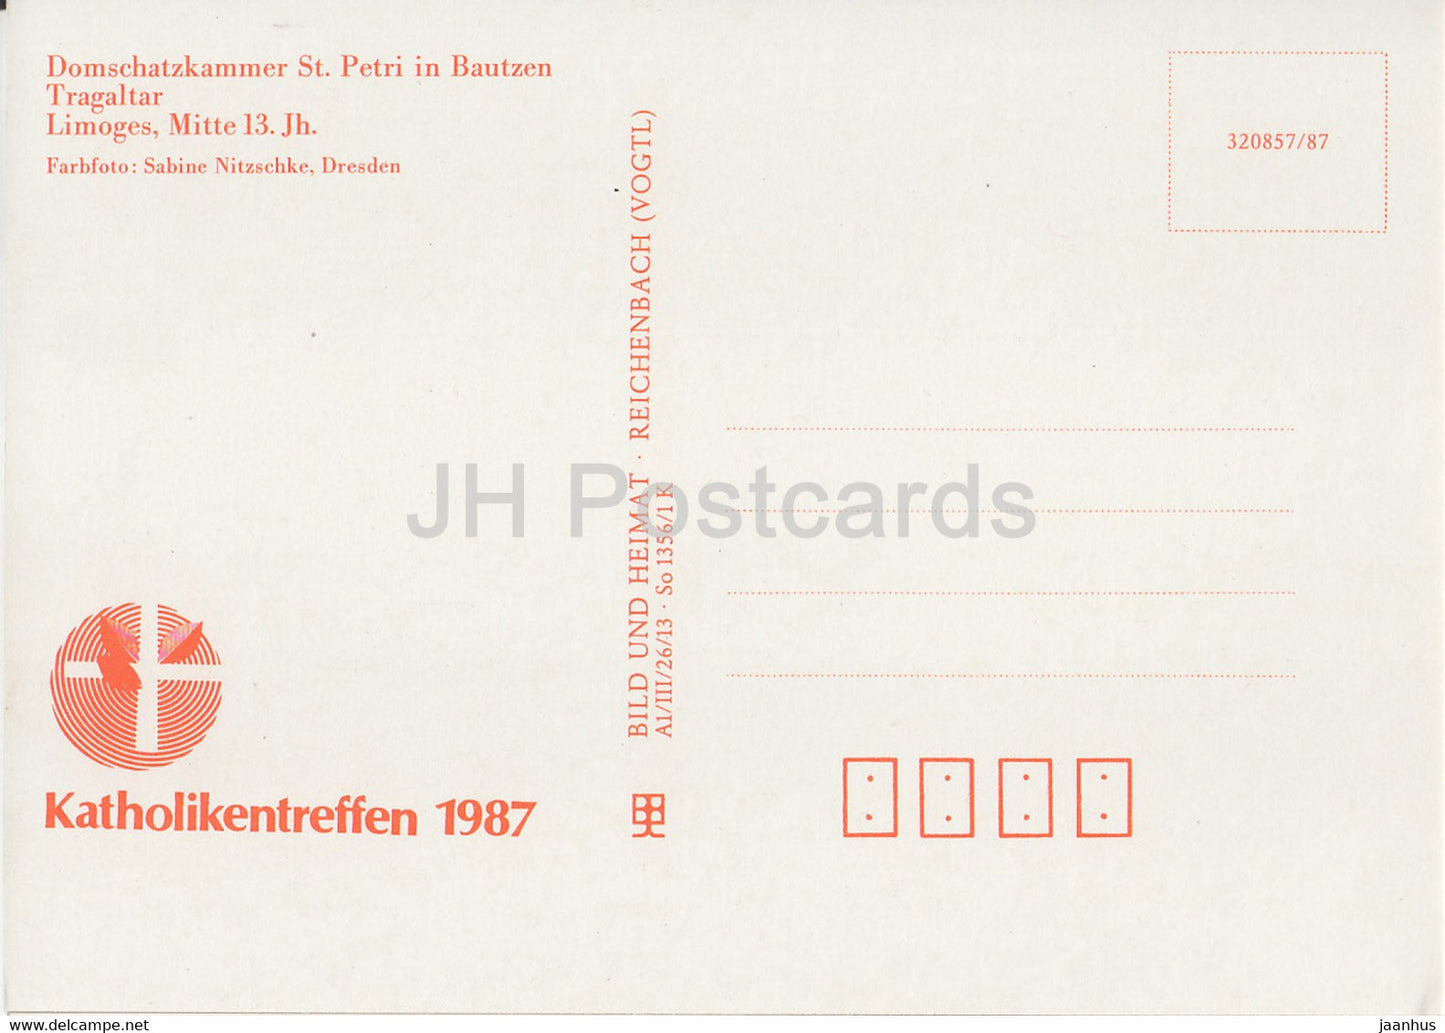 Tragaltar - Domschatzkammer St Petri in Bautzen - 1987 - DDR Germany - unused